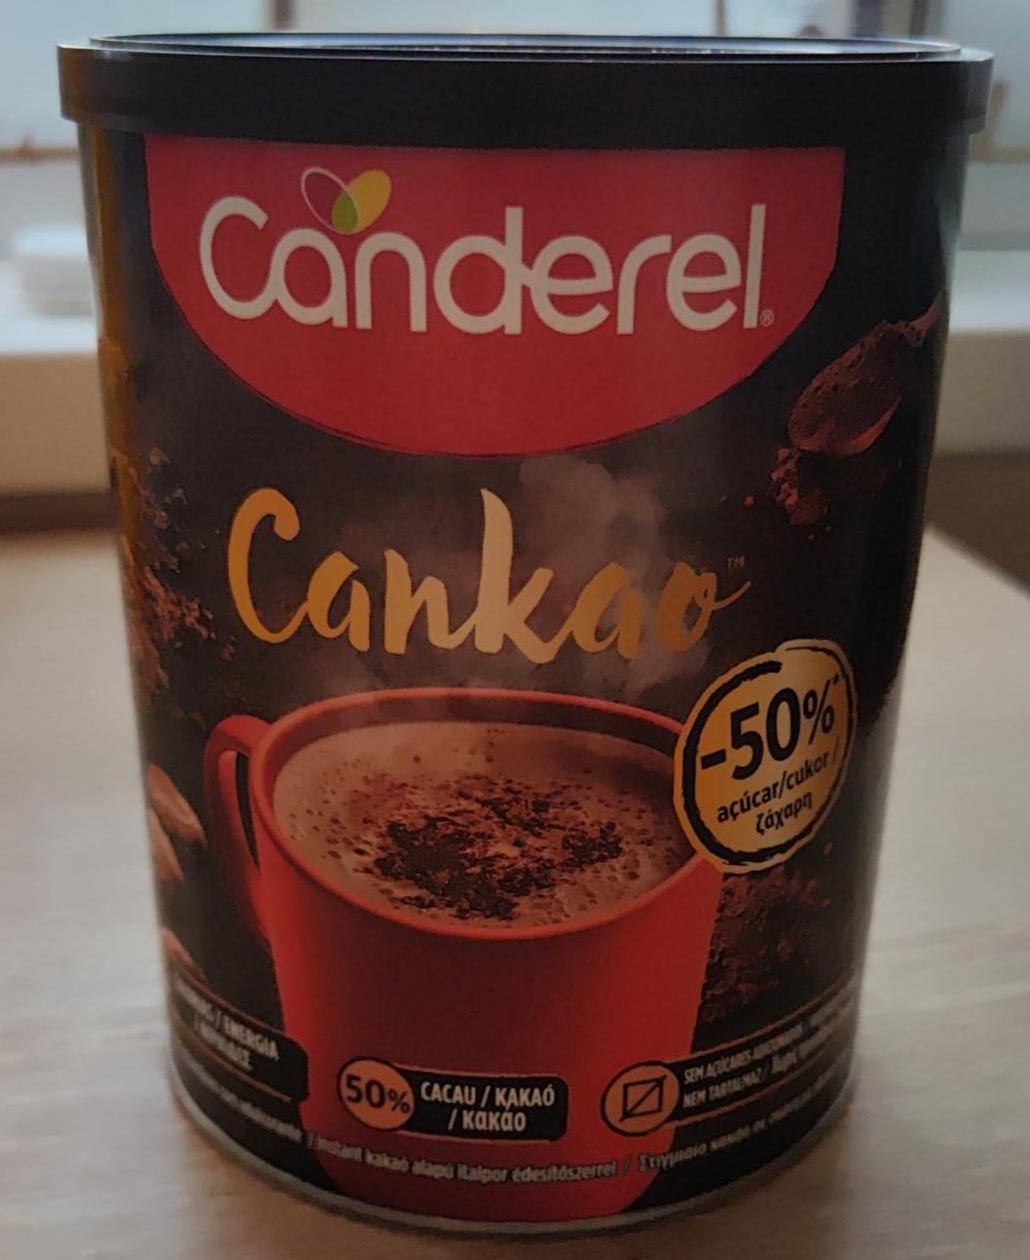 Képek - Cankao Canderel